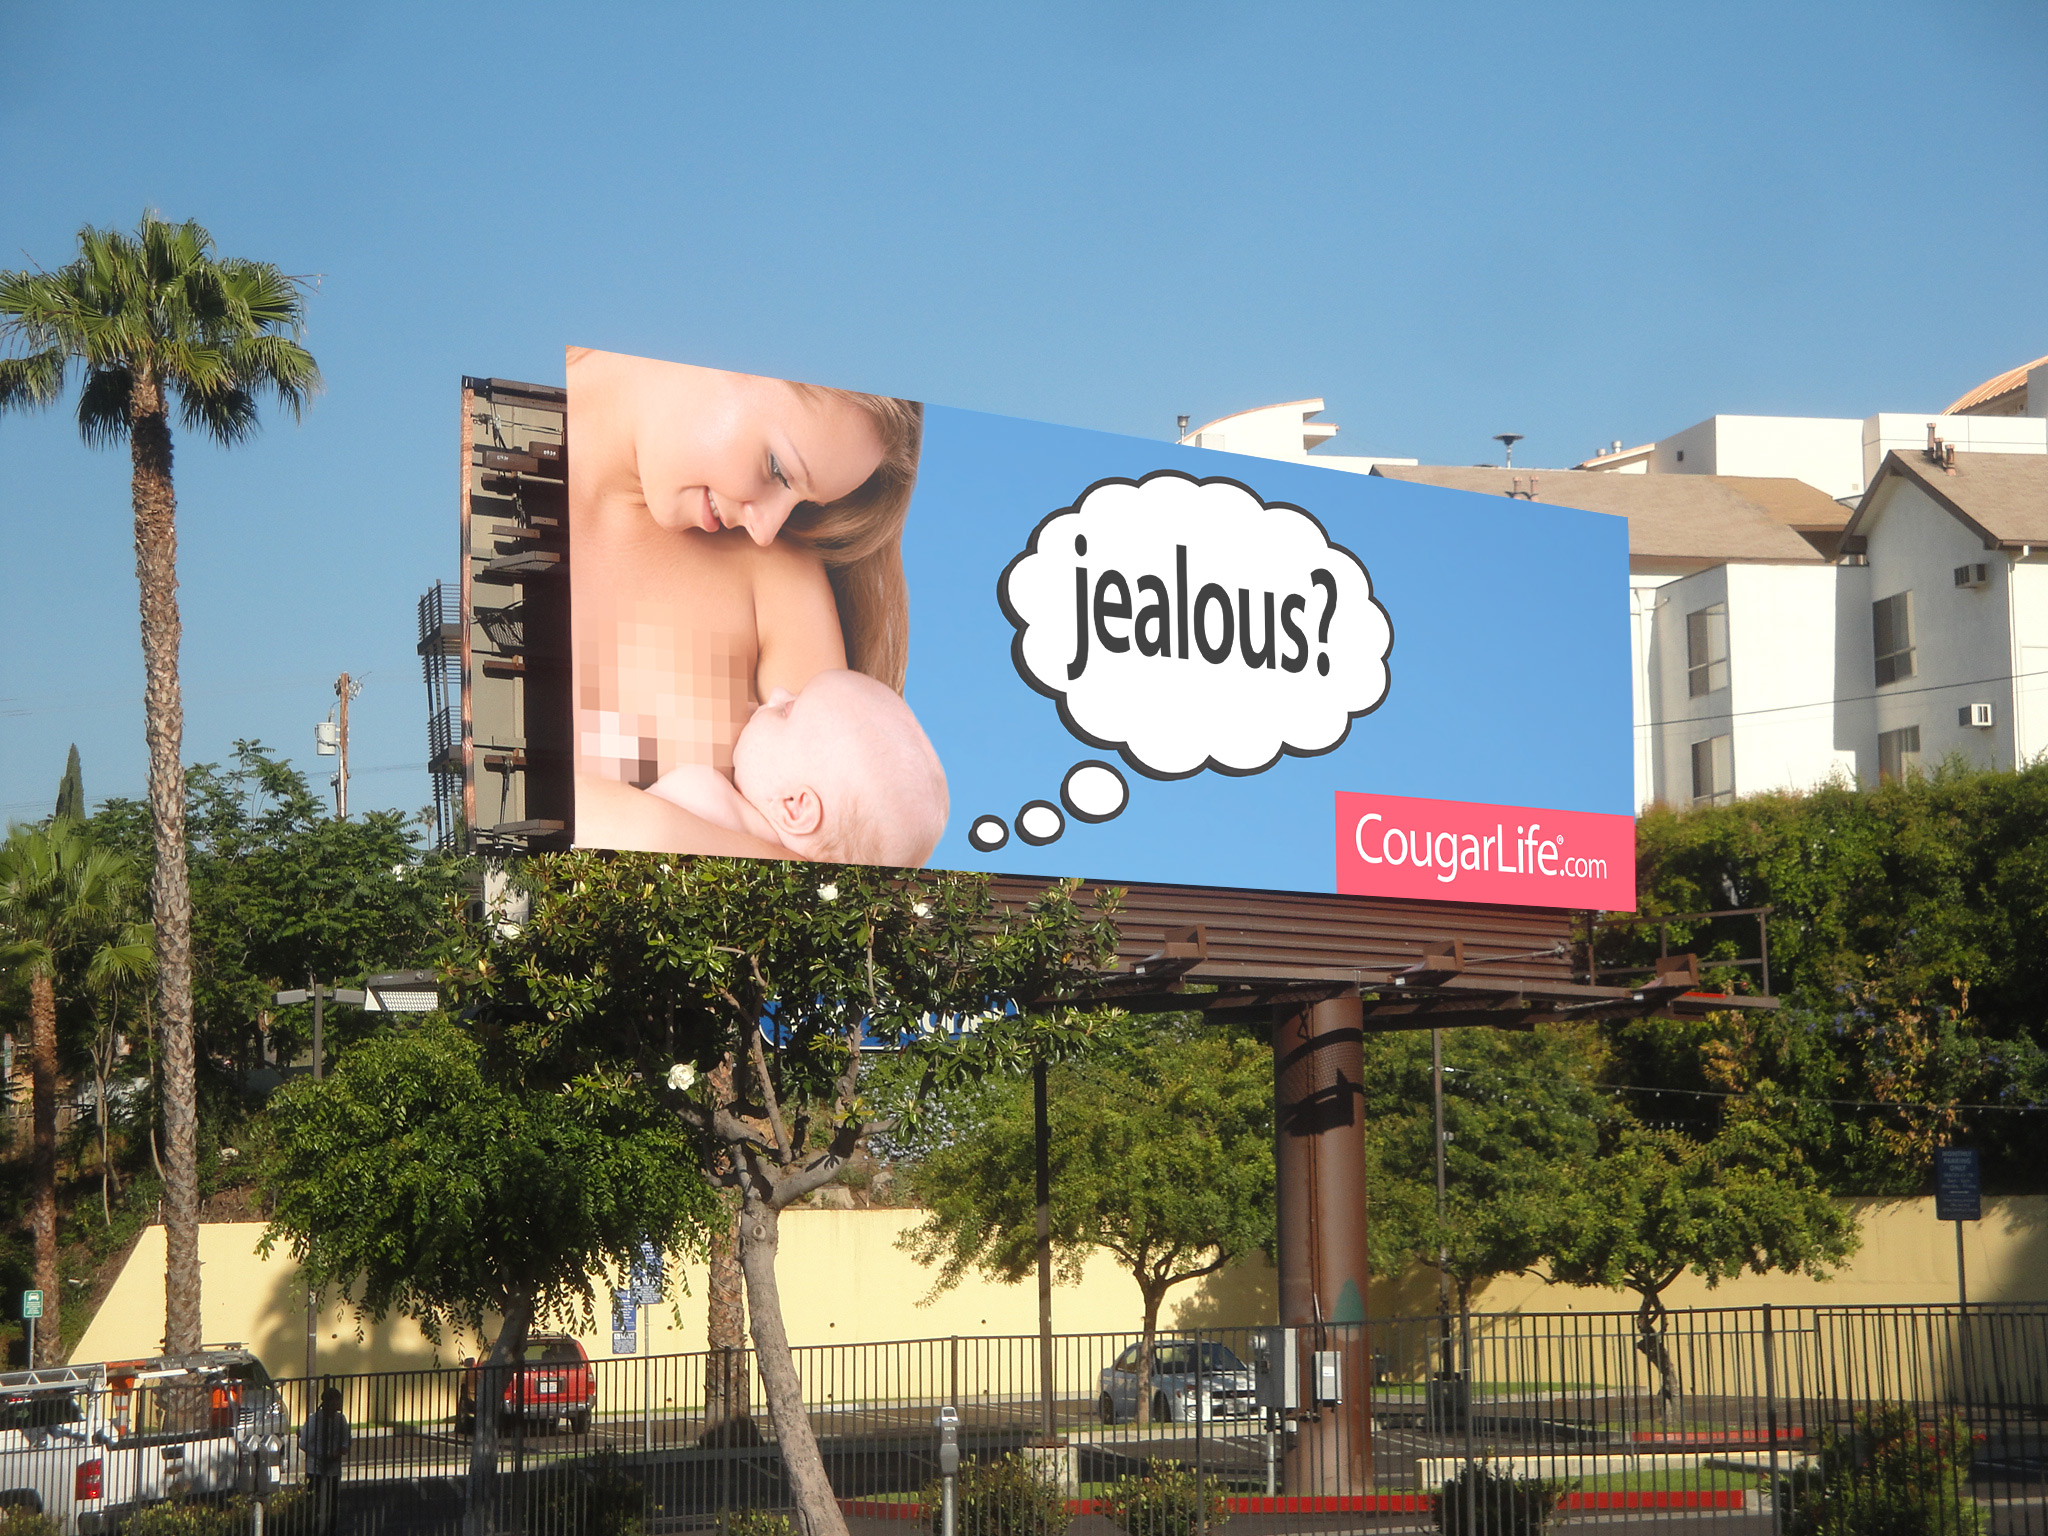 Breastfeeding Mom Used To Promote Cougar Dating on LA Billboard